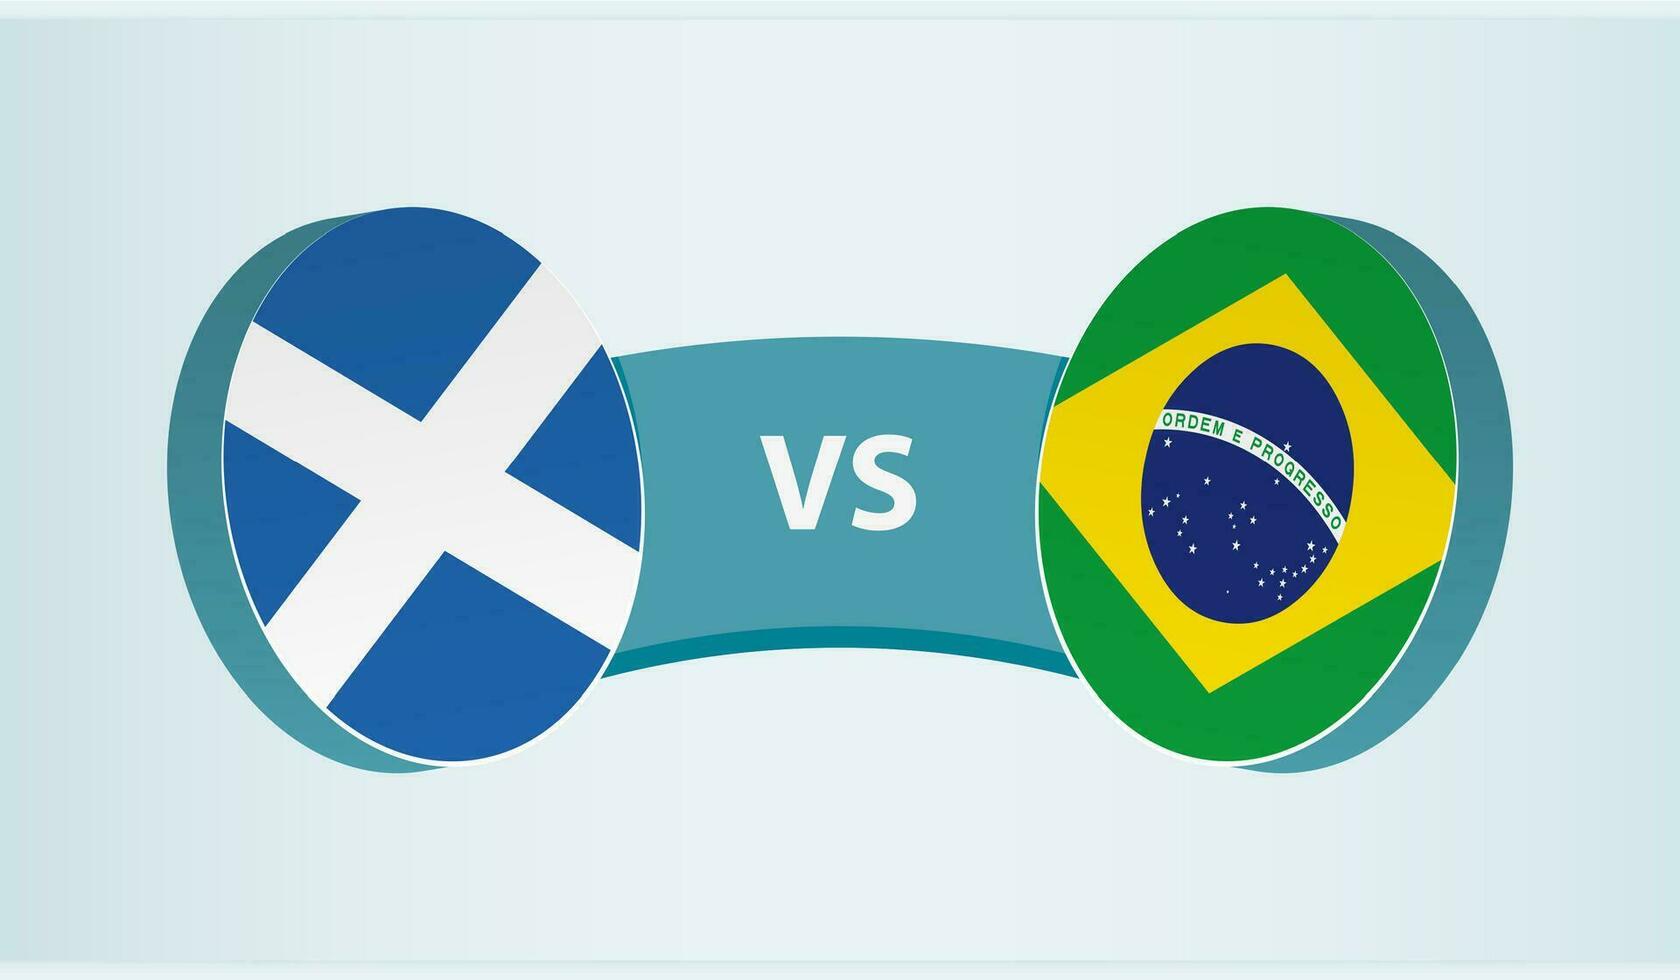 Scotland versus Brazil, team sports competition concept. vector